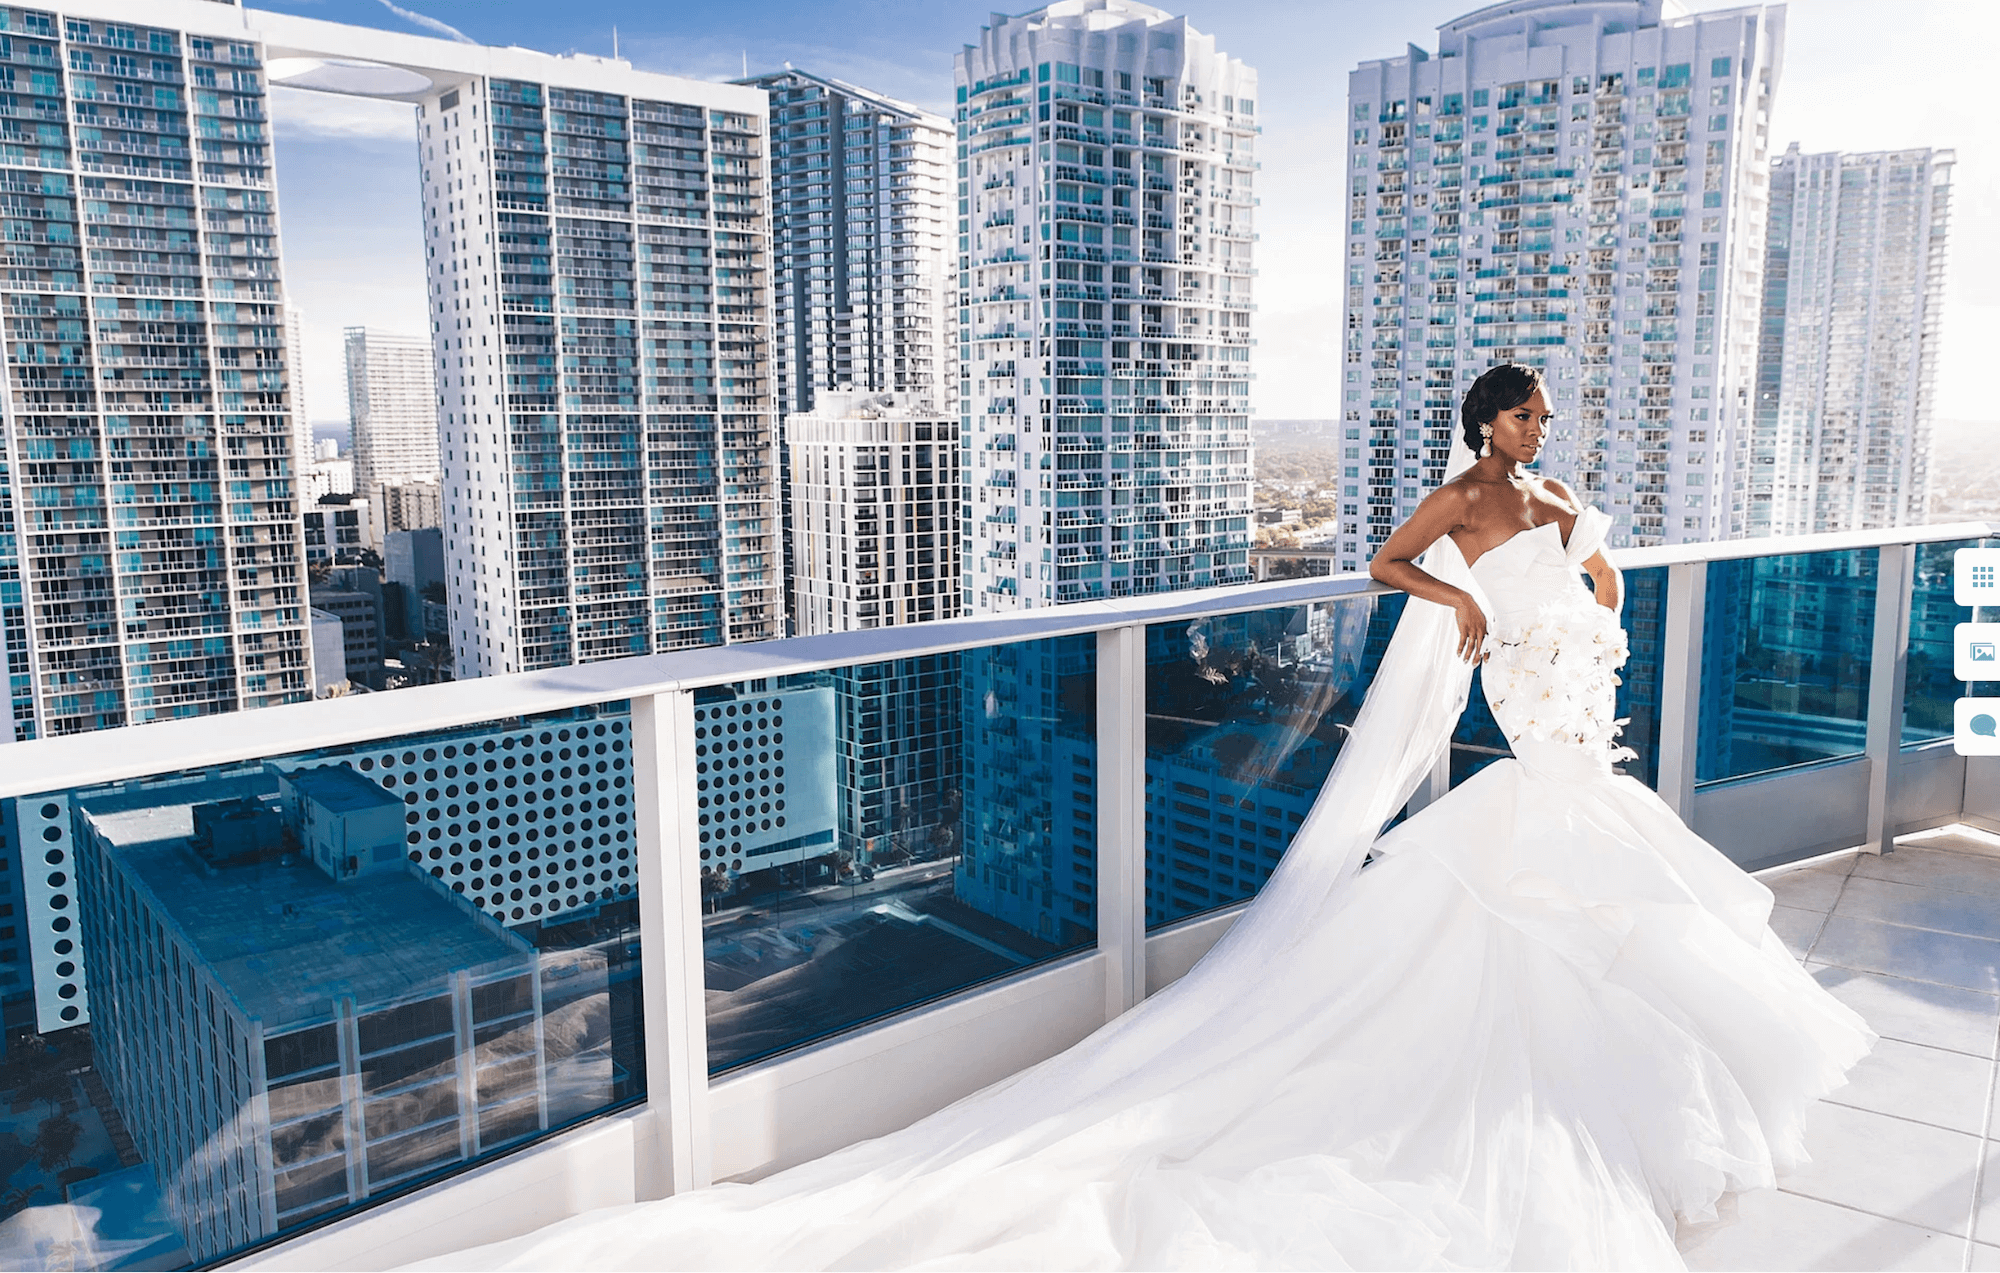 desti-guide-to-destination-weddings-podcast-008-bahamas-destination-wedding-photographer-black-destination-bride-stanlo-photography-interview-2.png